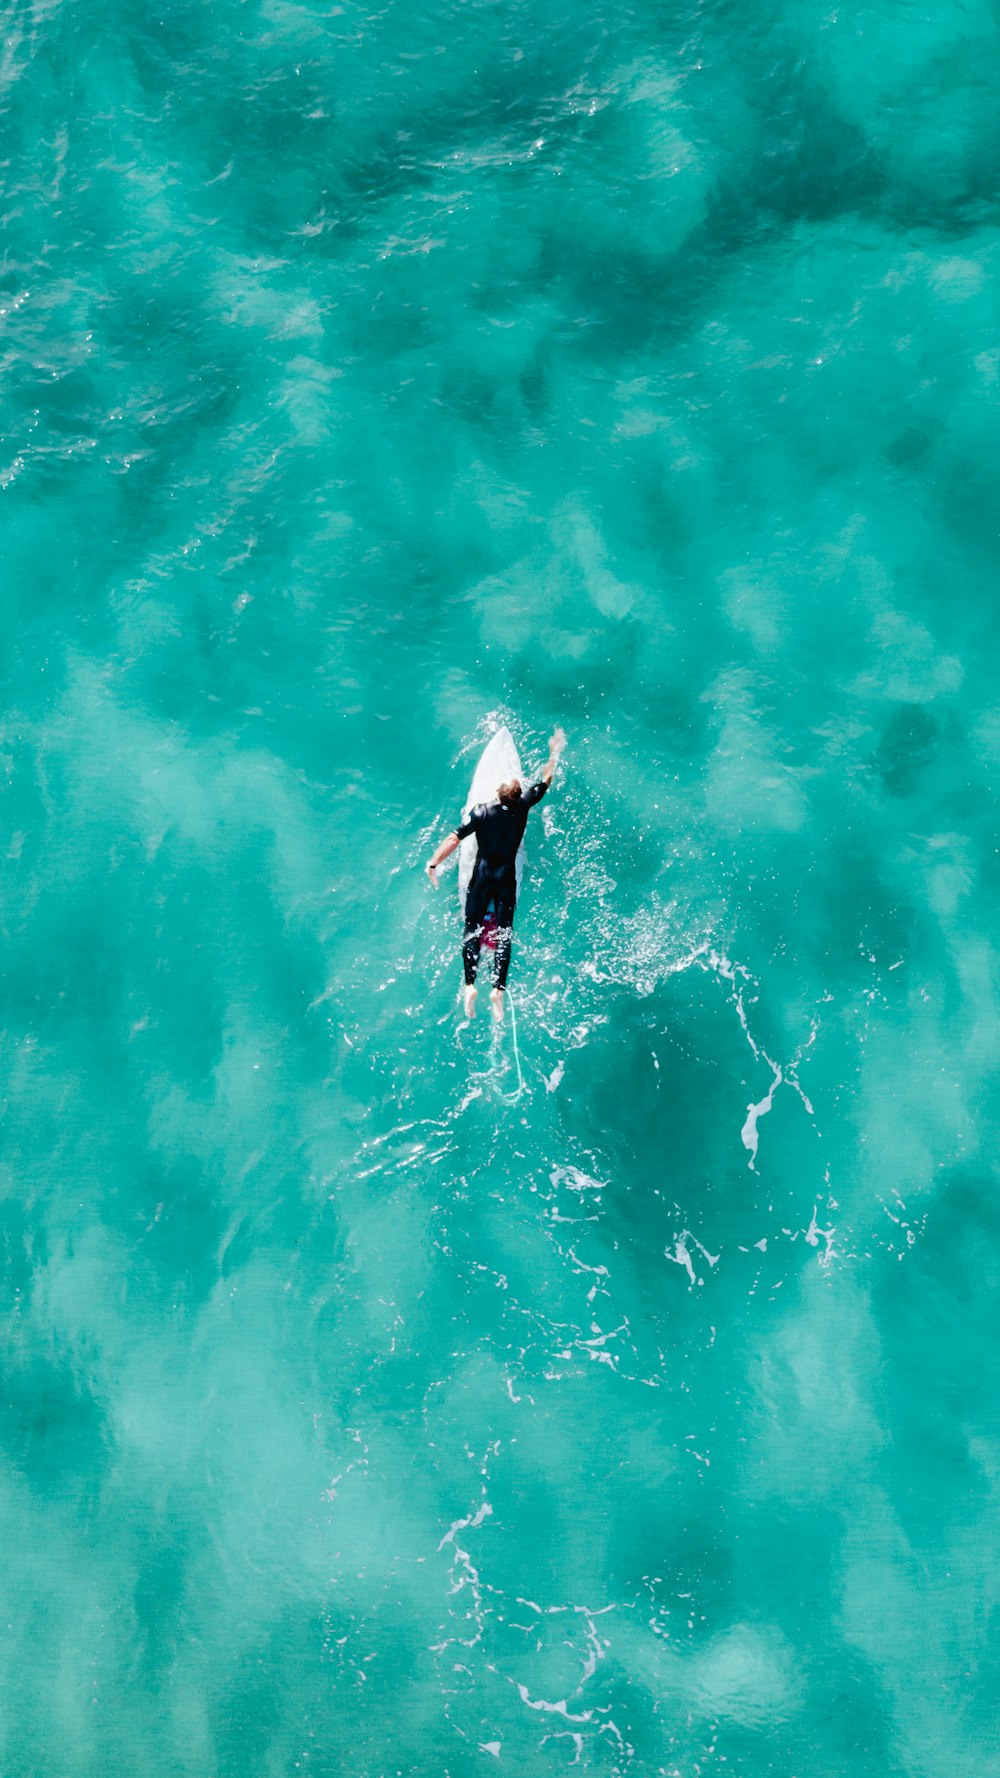 man in black wetsuit surfing on water